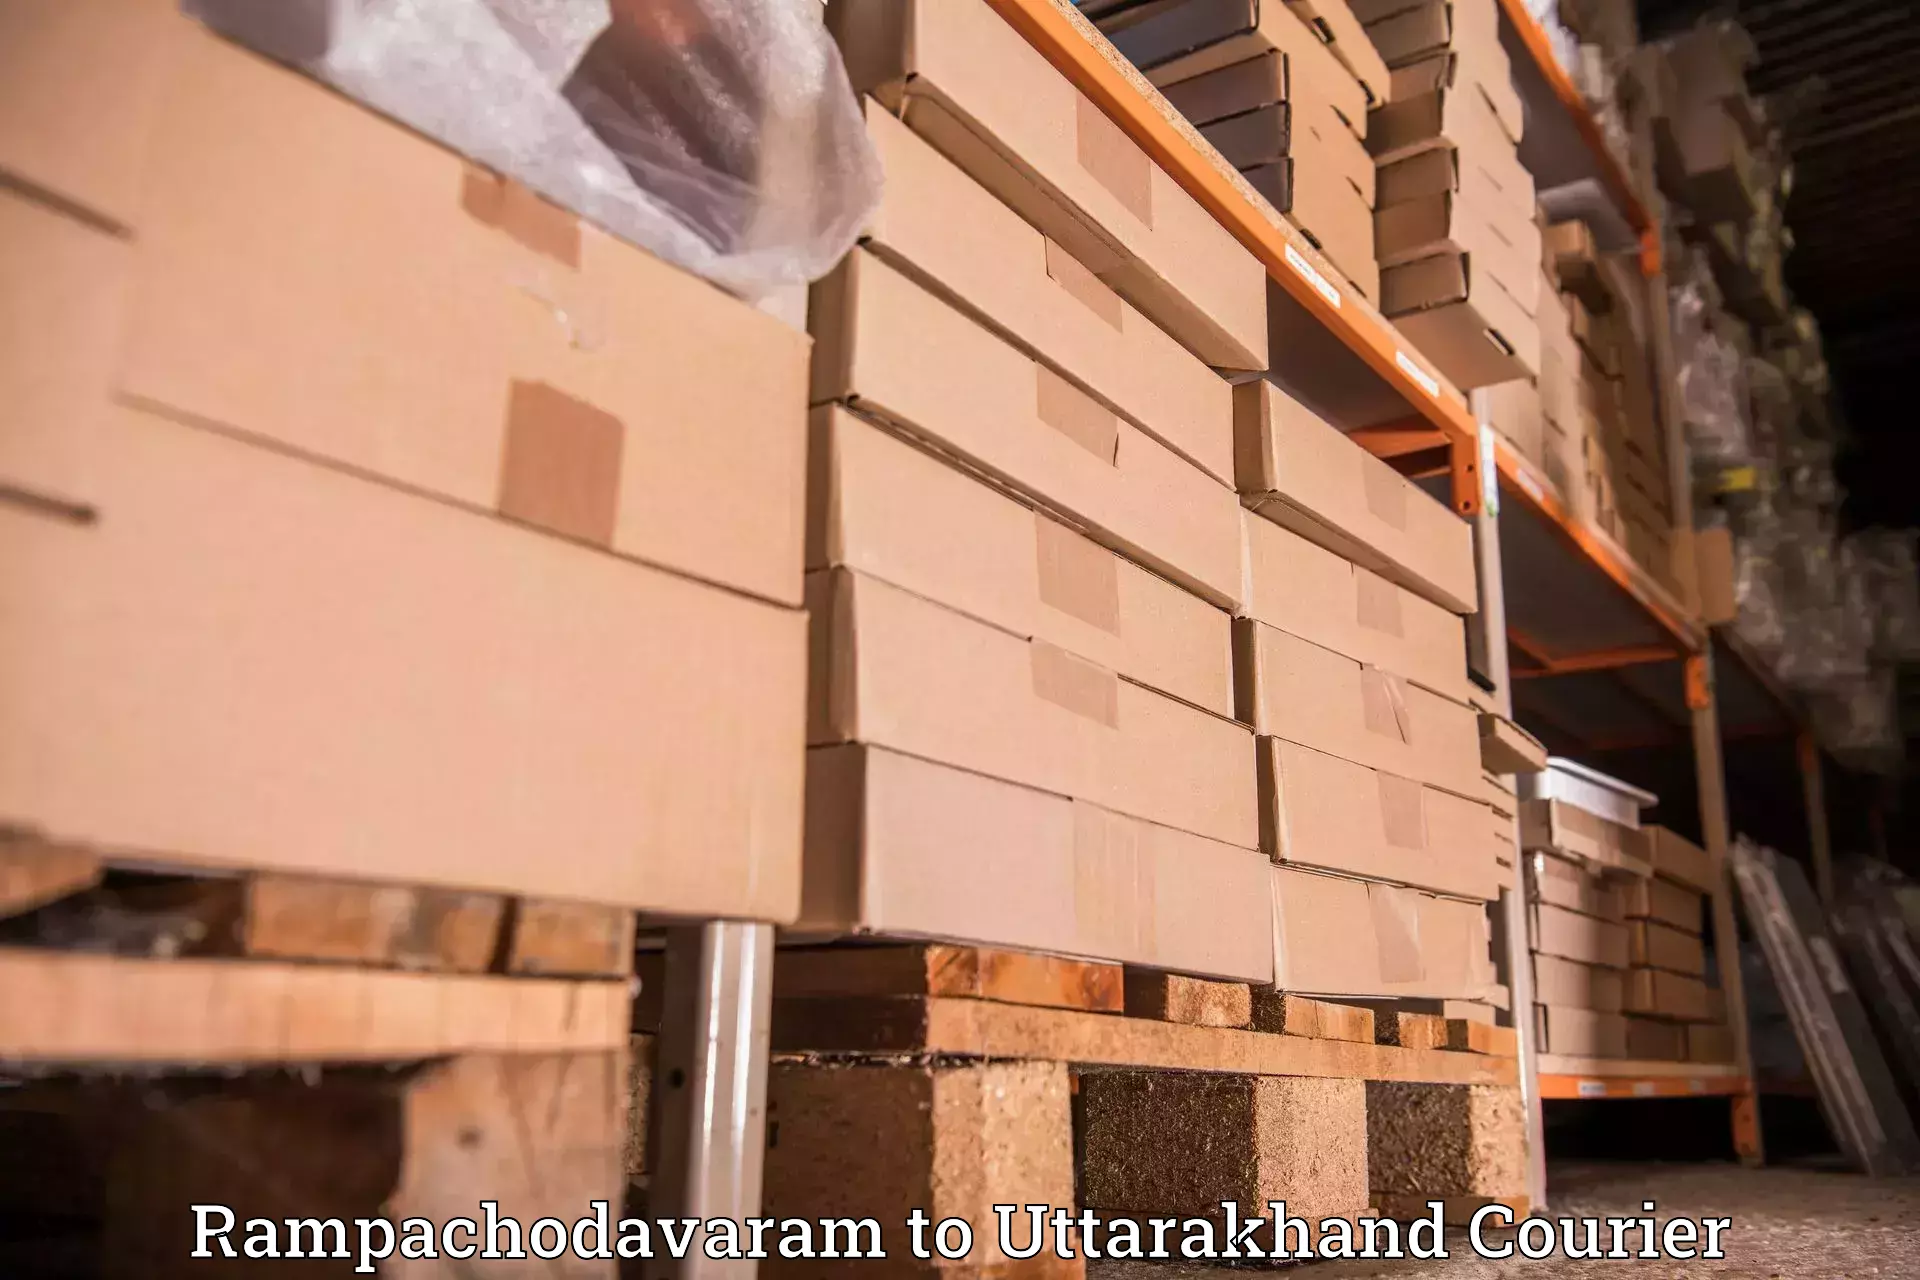 Seamless shipping experience Rampachodavaram to Champawat